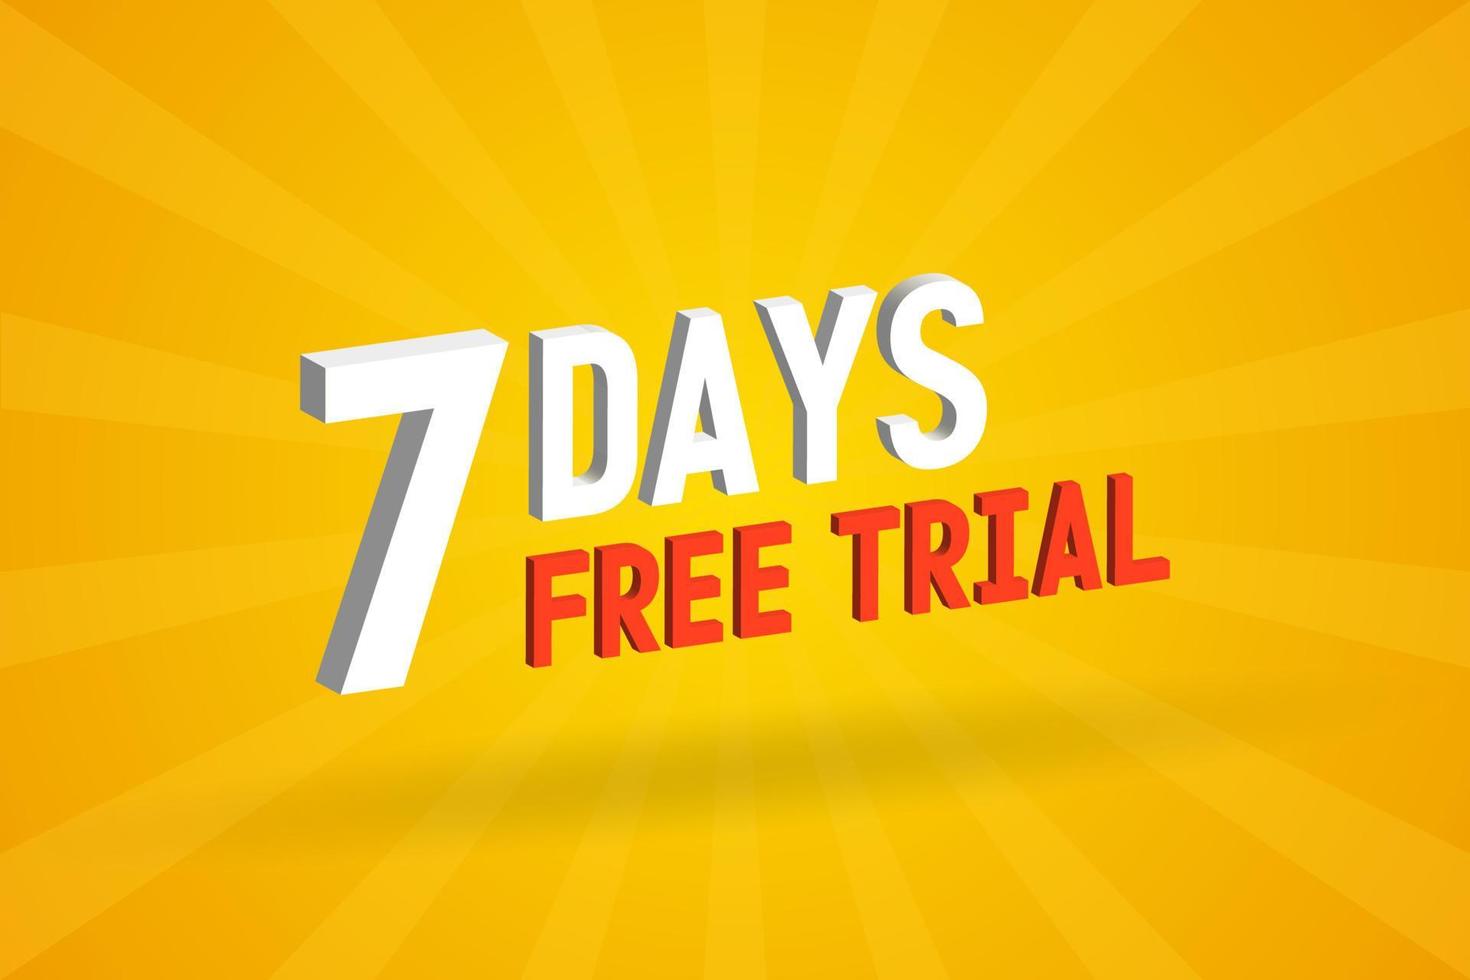 oferta gratuita 7 días de prueba gratuita texto 3d stock vector